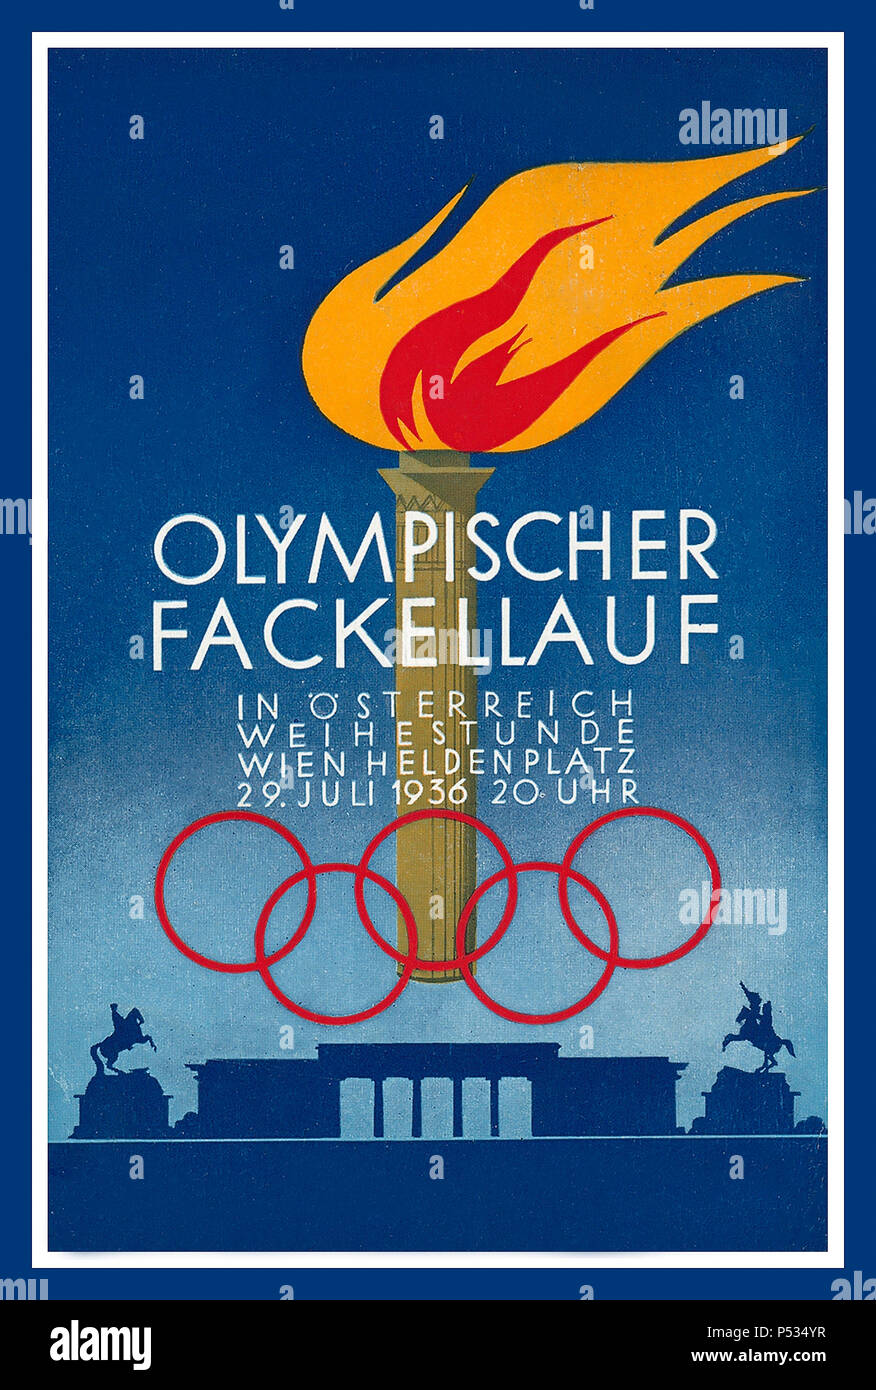 1936 Germany Austria Berlin Olympics Olympic Rings Brandenburg Gate Commemorative Postcard Poster Flame Torch 29th July OLYMPISCHER FACKELLAUF Helden Platz Vienna Stock Photo